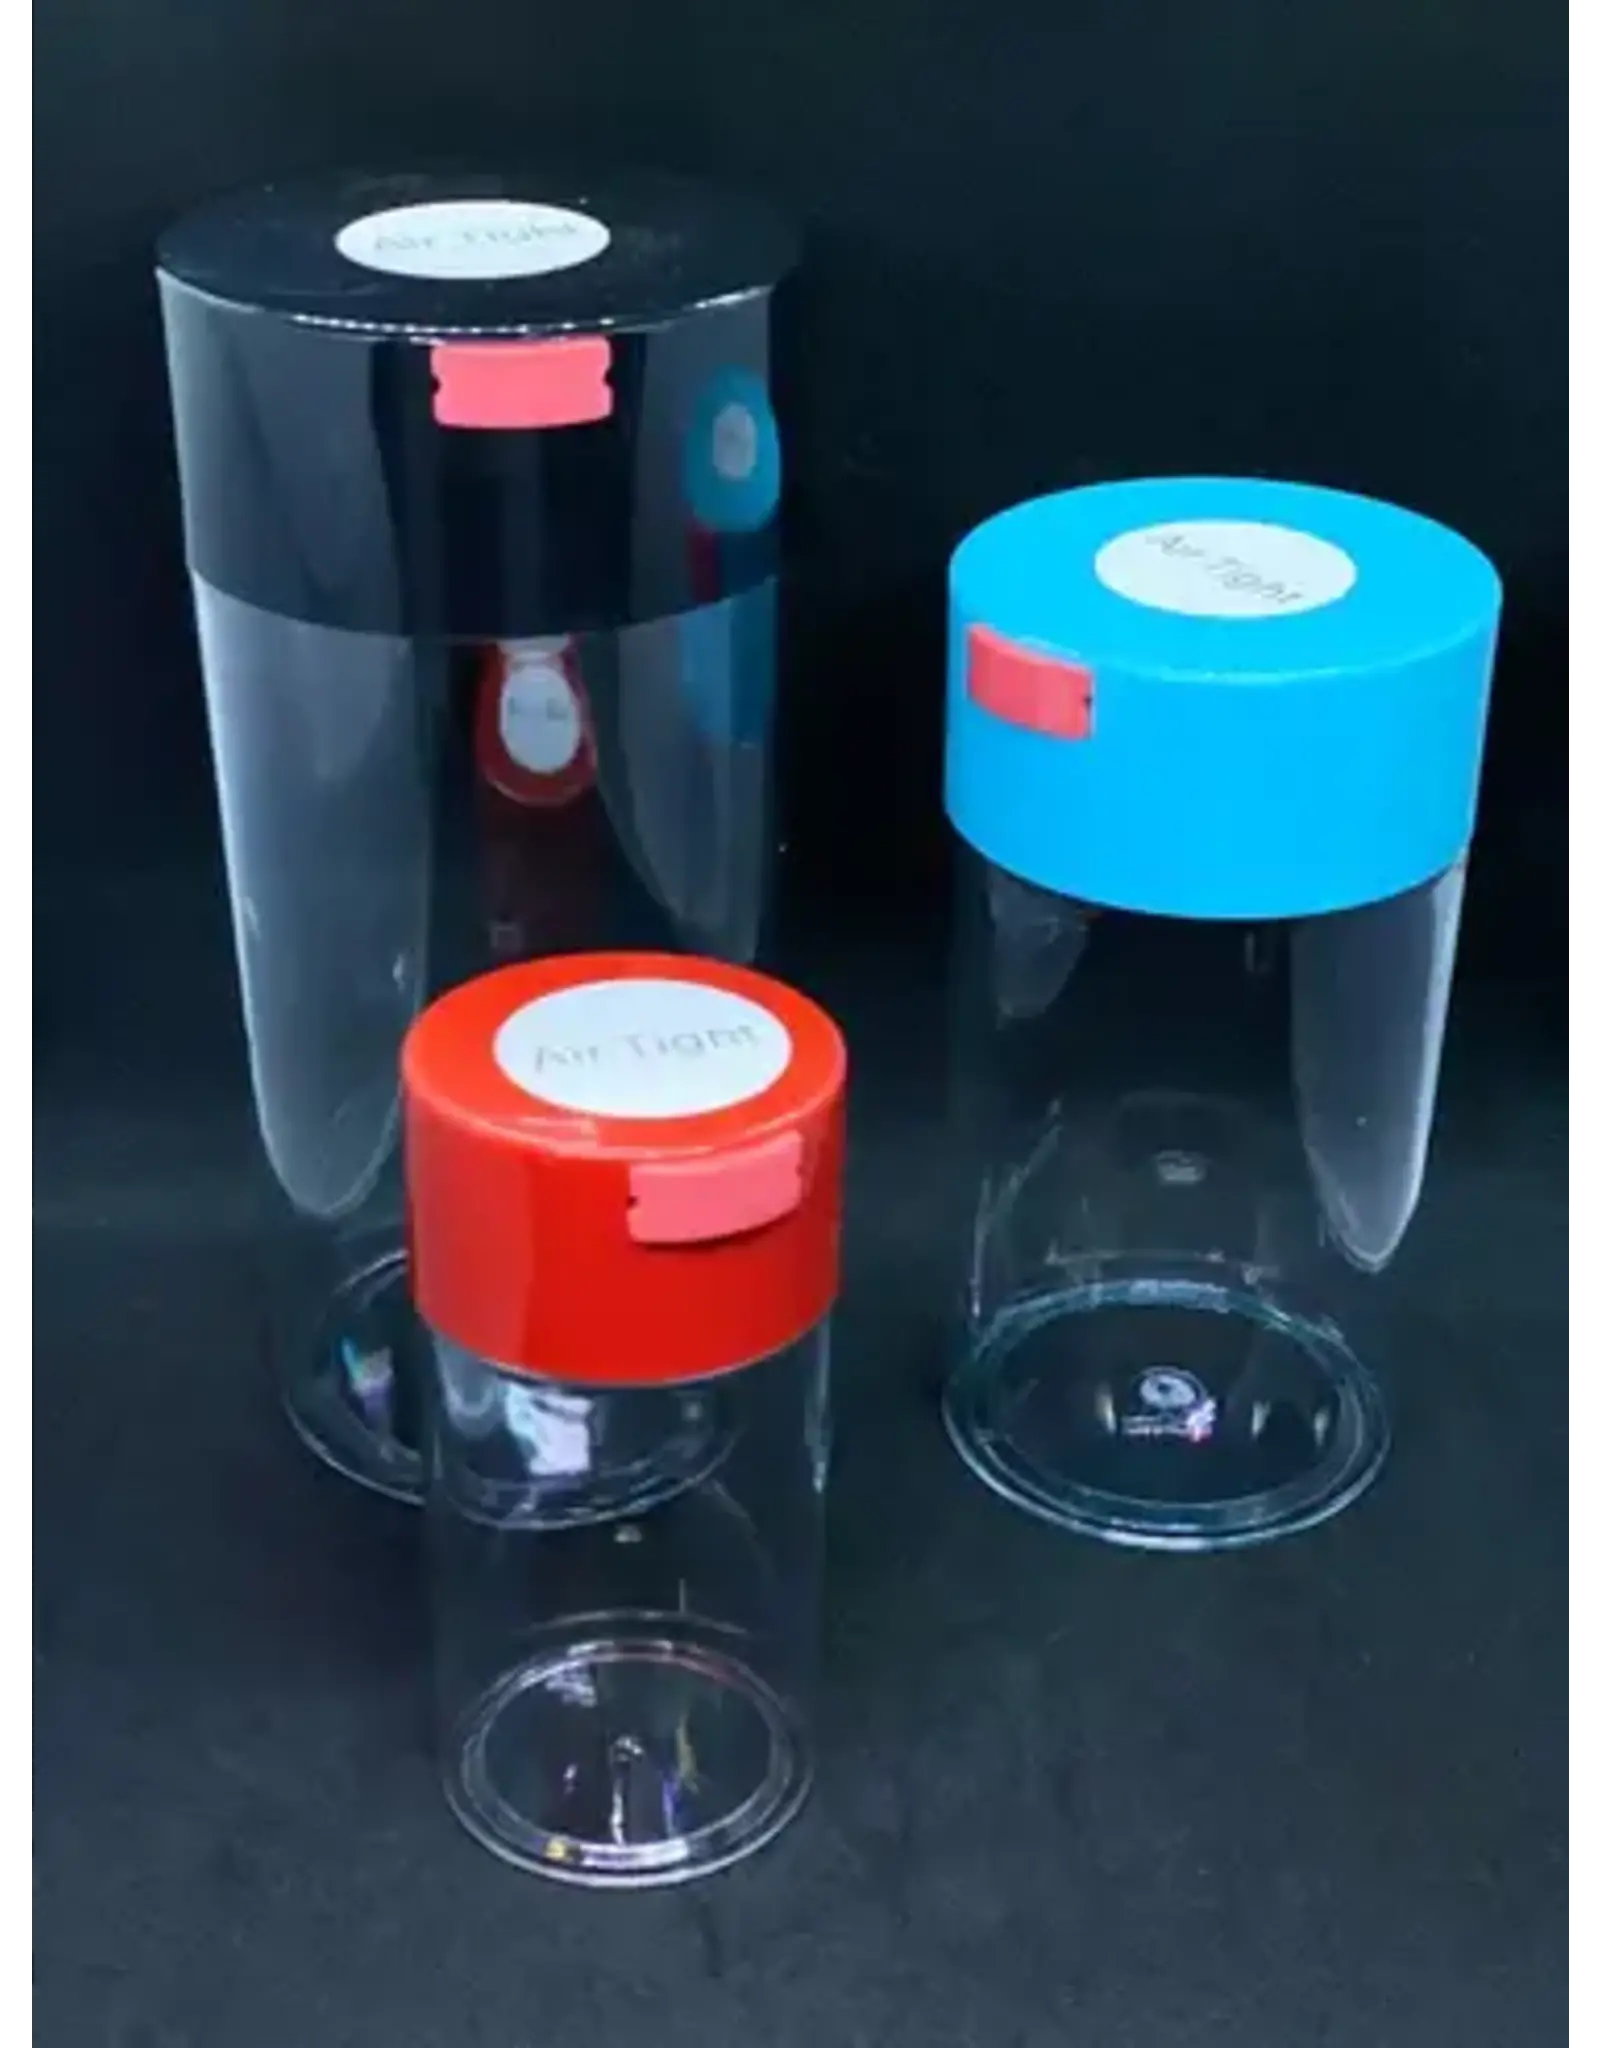 Smokerz Glass SMZ Air Tight Jar (Large)